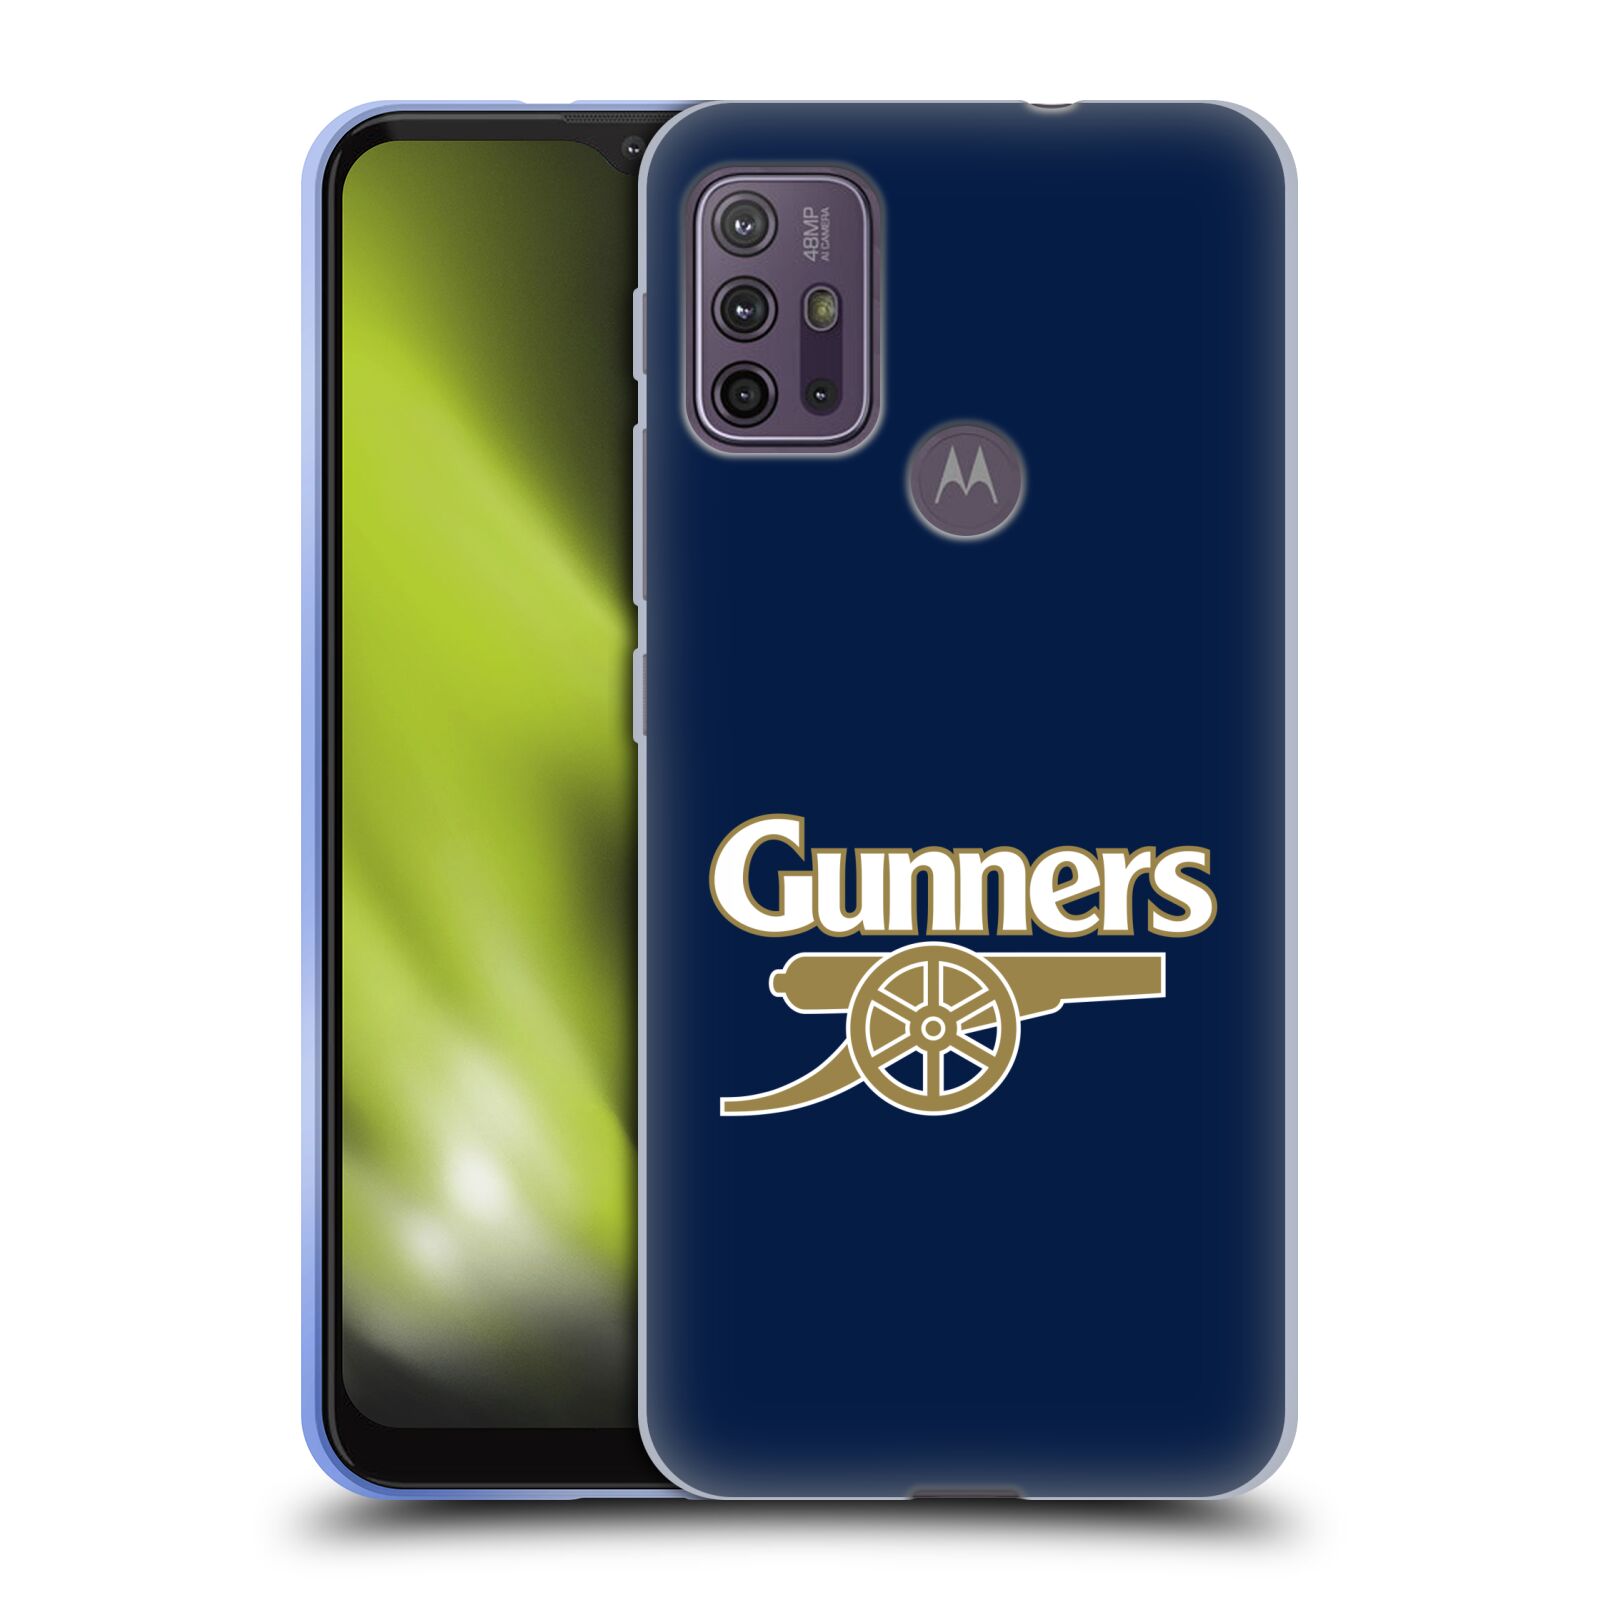 Silikonové pouzdro na mobil Motorola Moto G10 / G30 - Head Case - Arsenal FC - Gunners